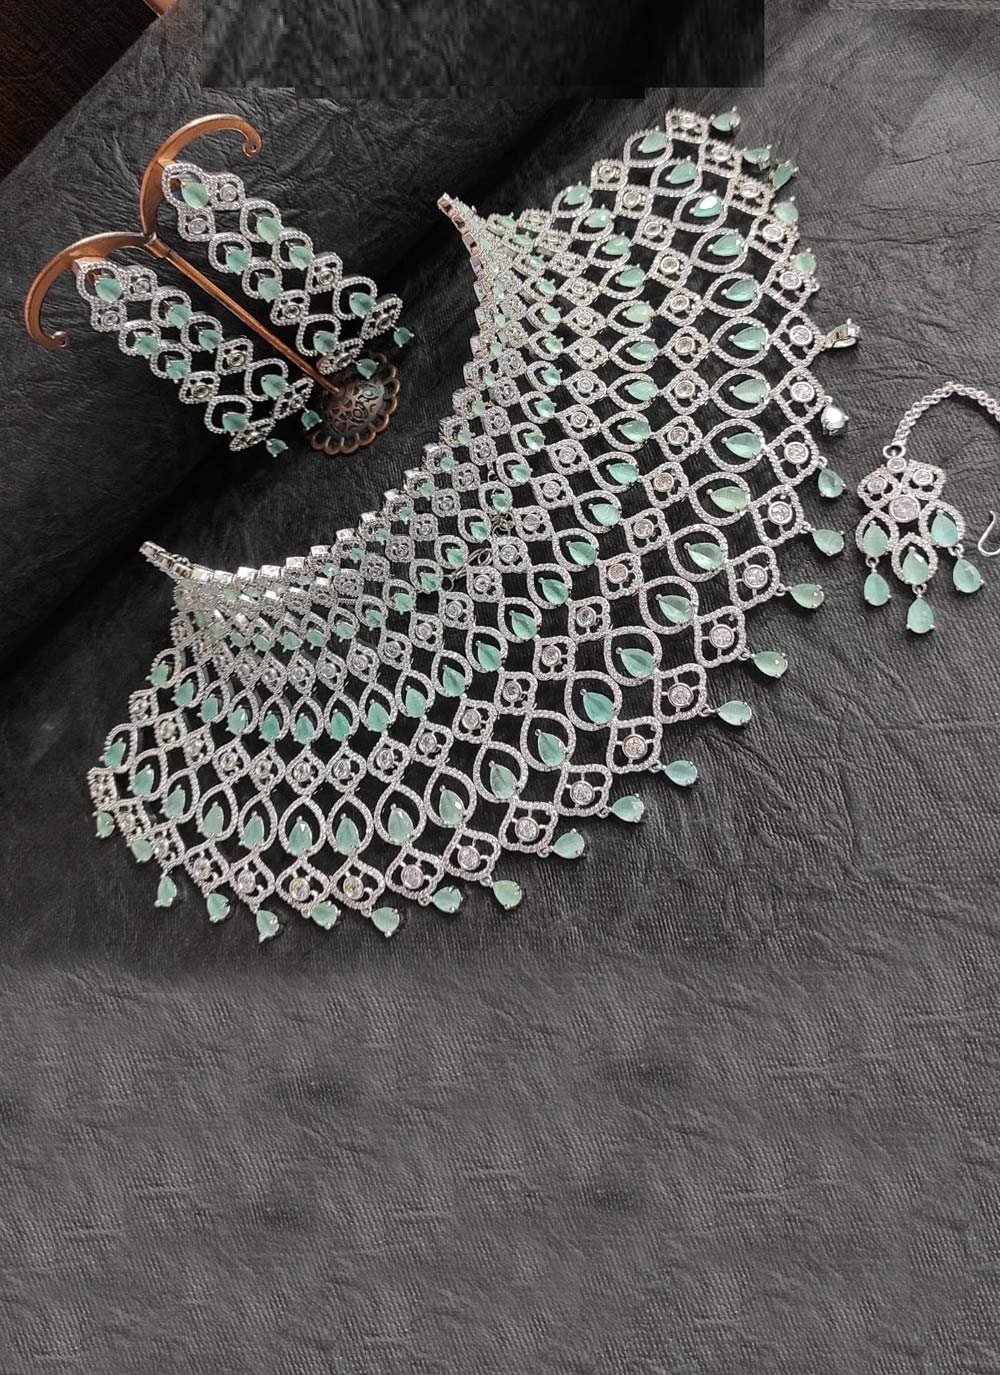 Superb Diamond Work Bridal Jewelry